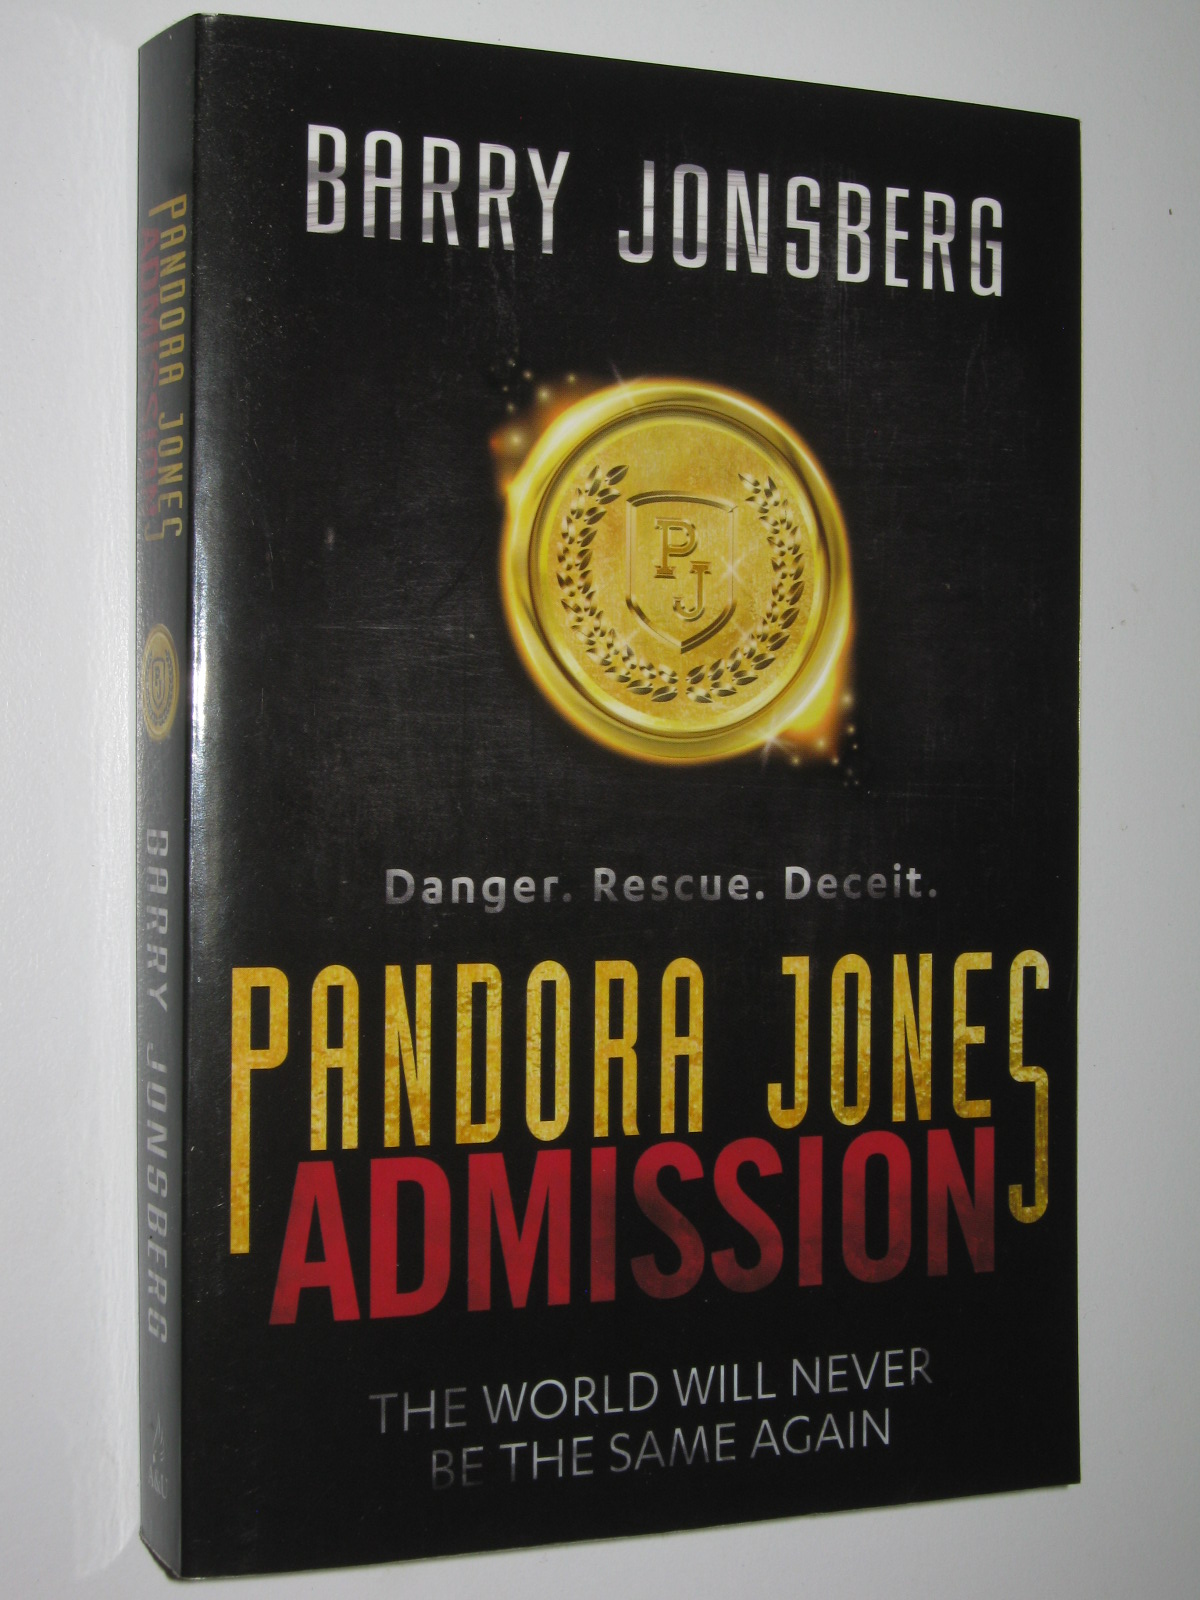 Pandora Admission de Jonsberg, Barry: Fine Trade Paperback First Edition., Signed Author(s) | Manyhills Books